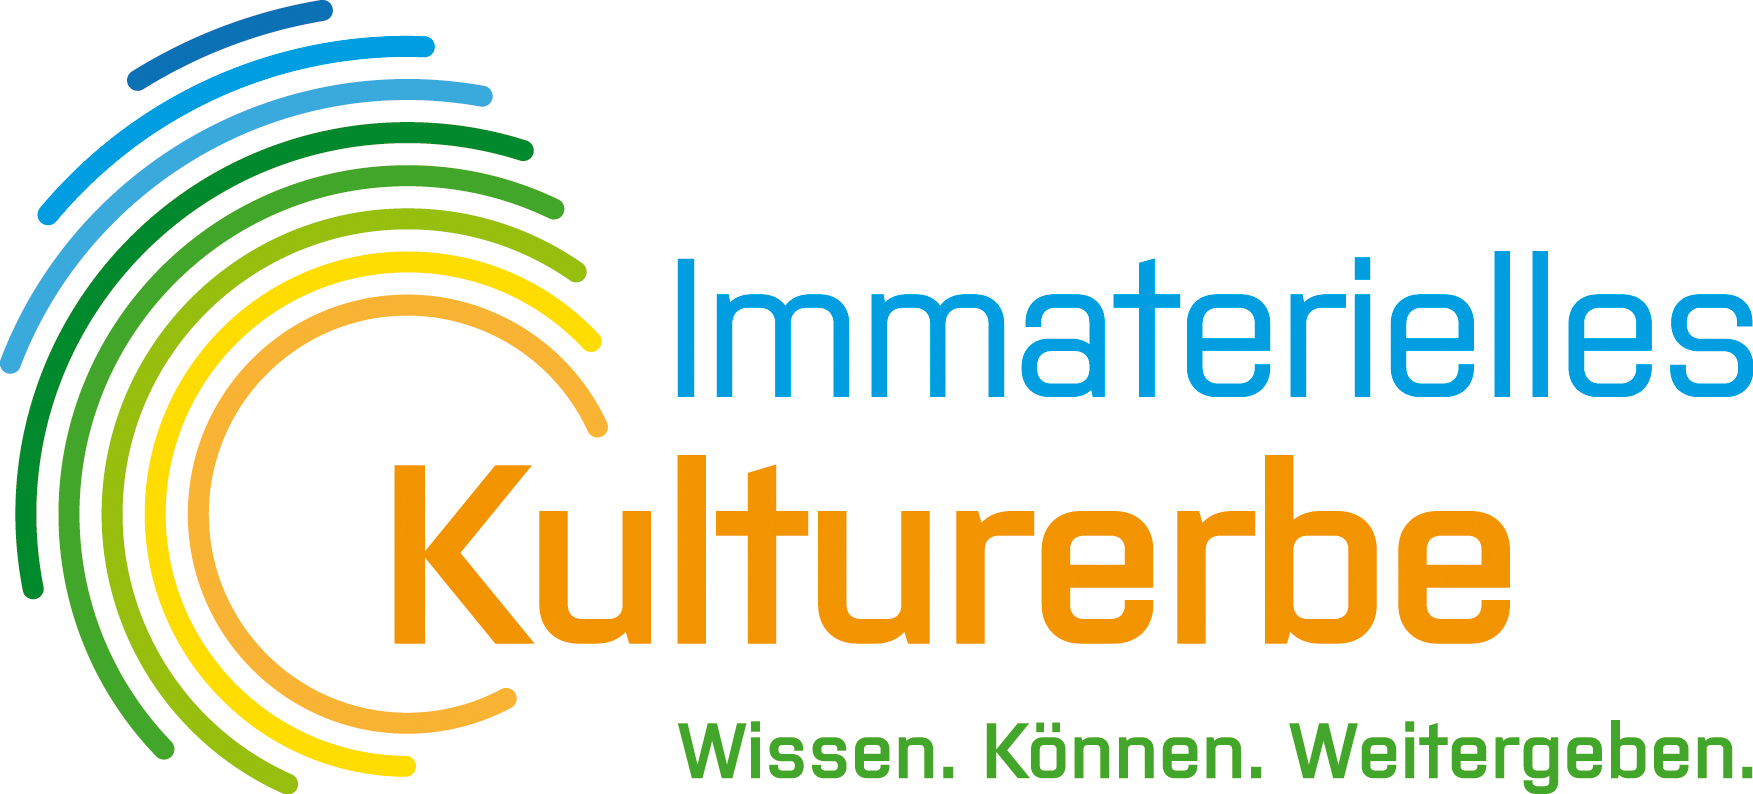 logo-immaterielles-kulturerbe-web.jpg